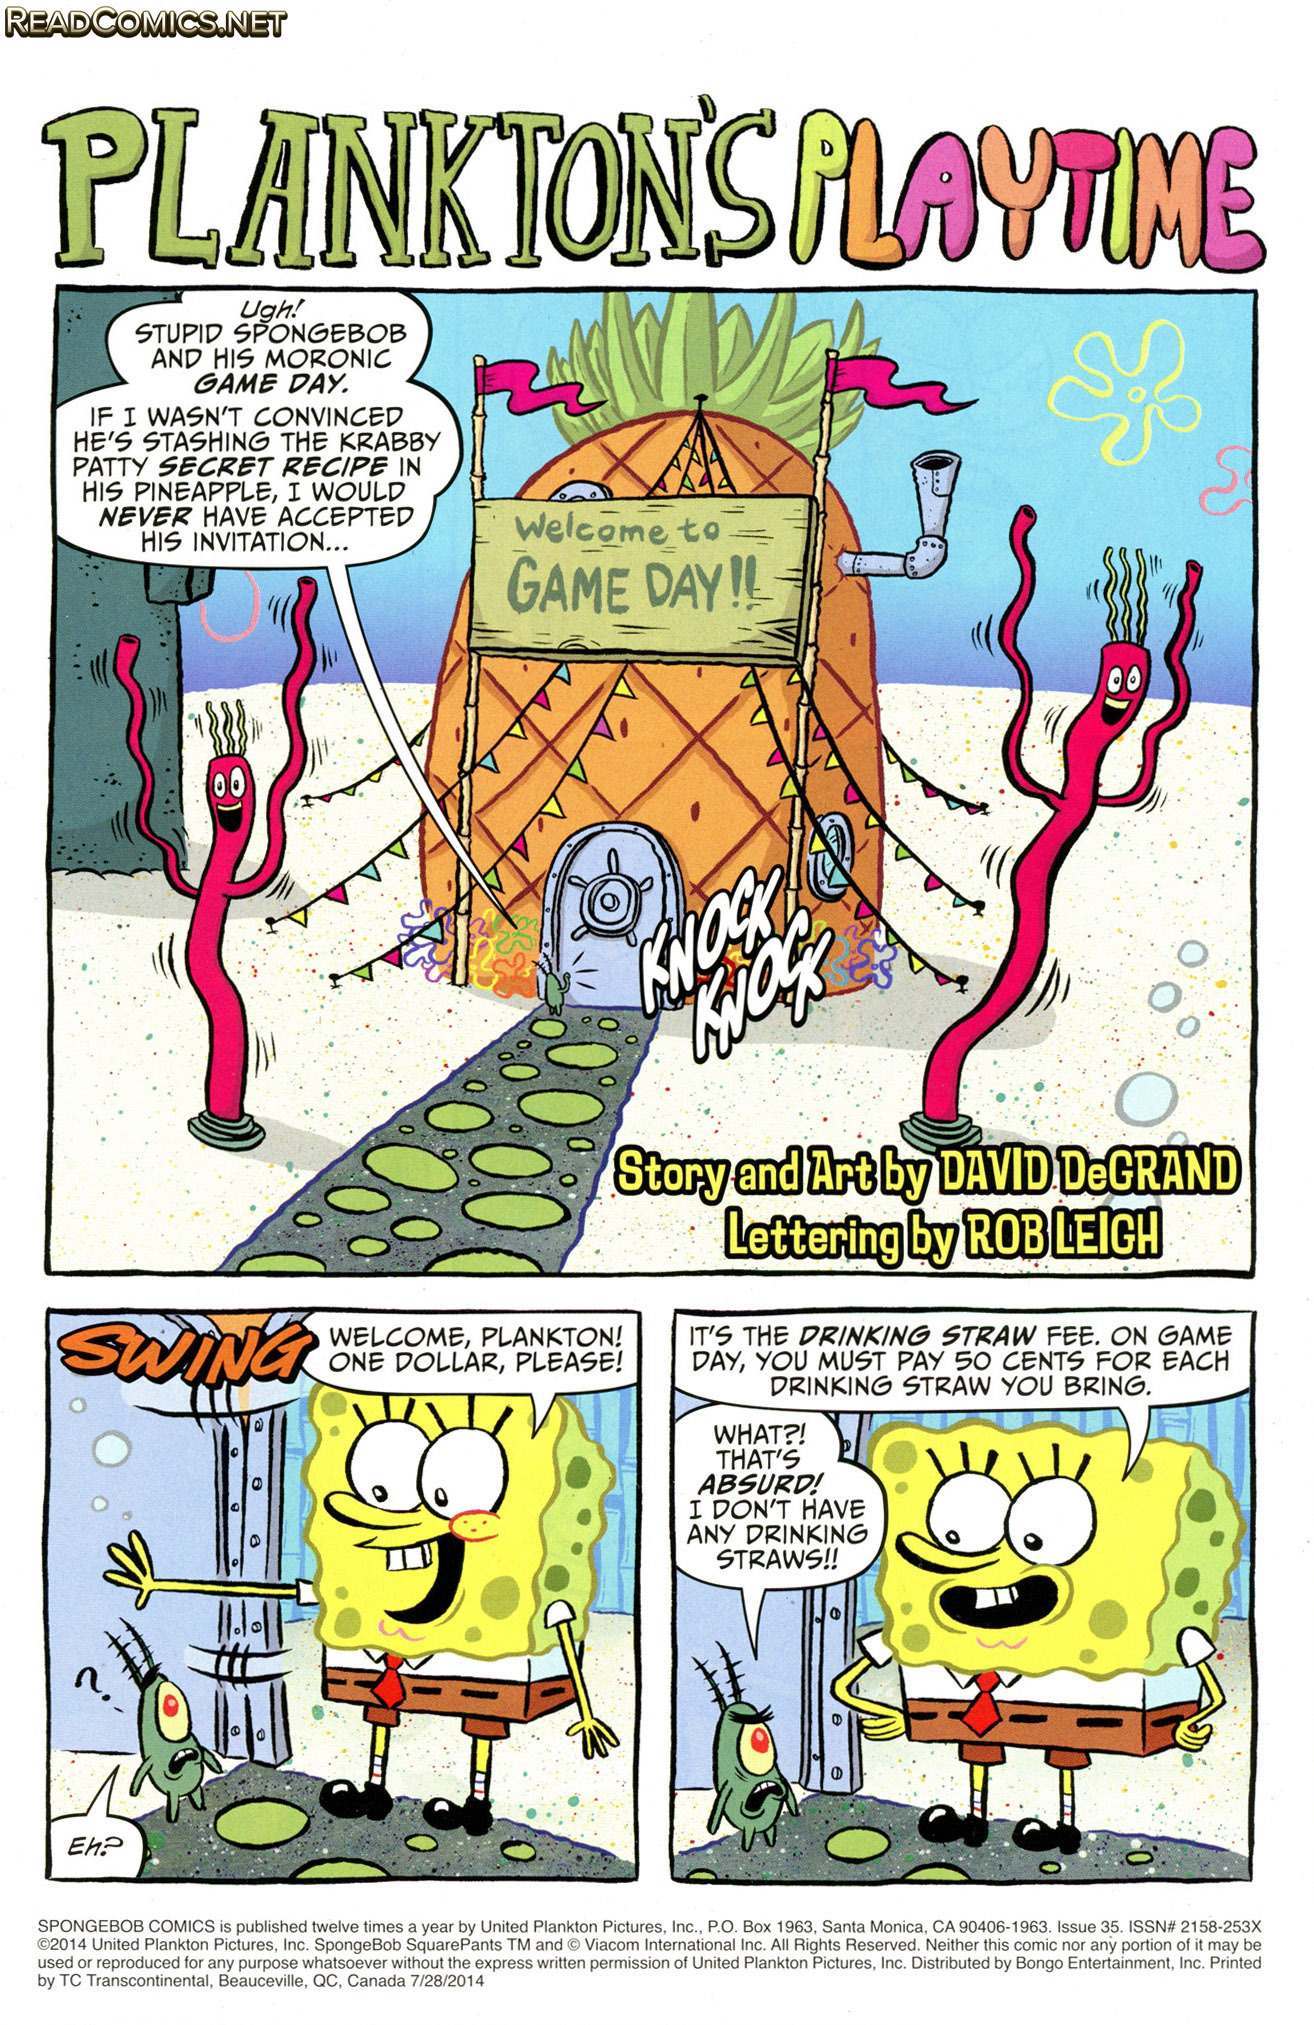 SpongeBob Comics (2011-): Chapter 35 - Page 3